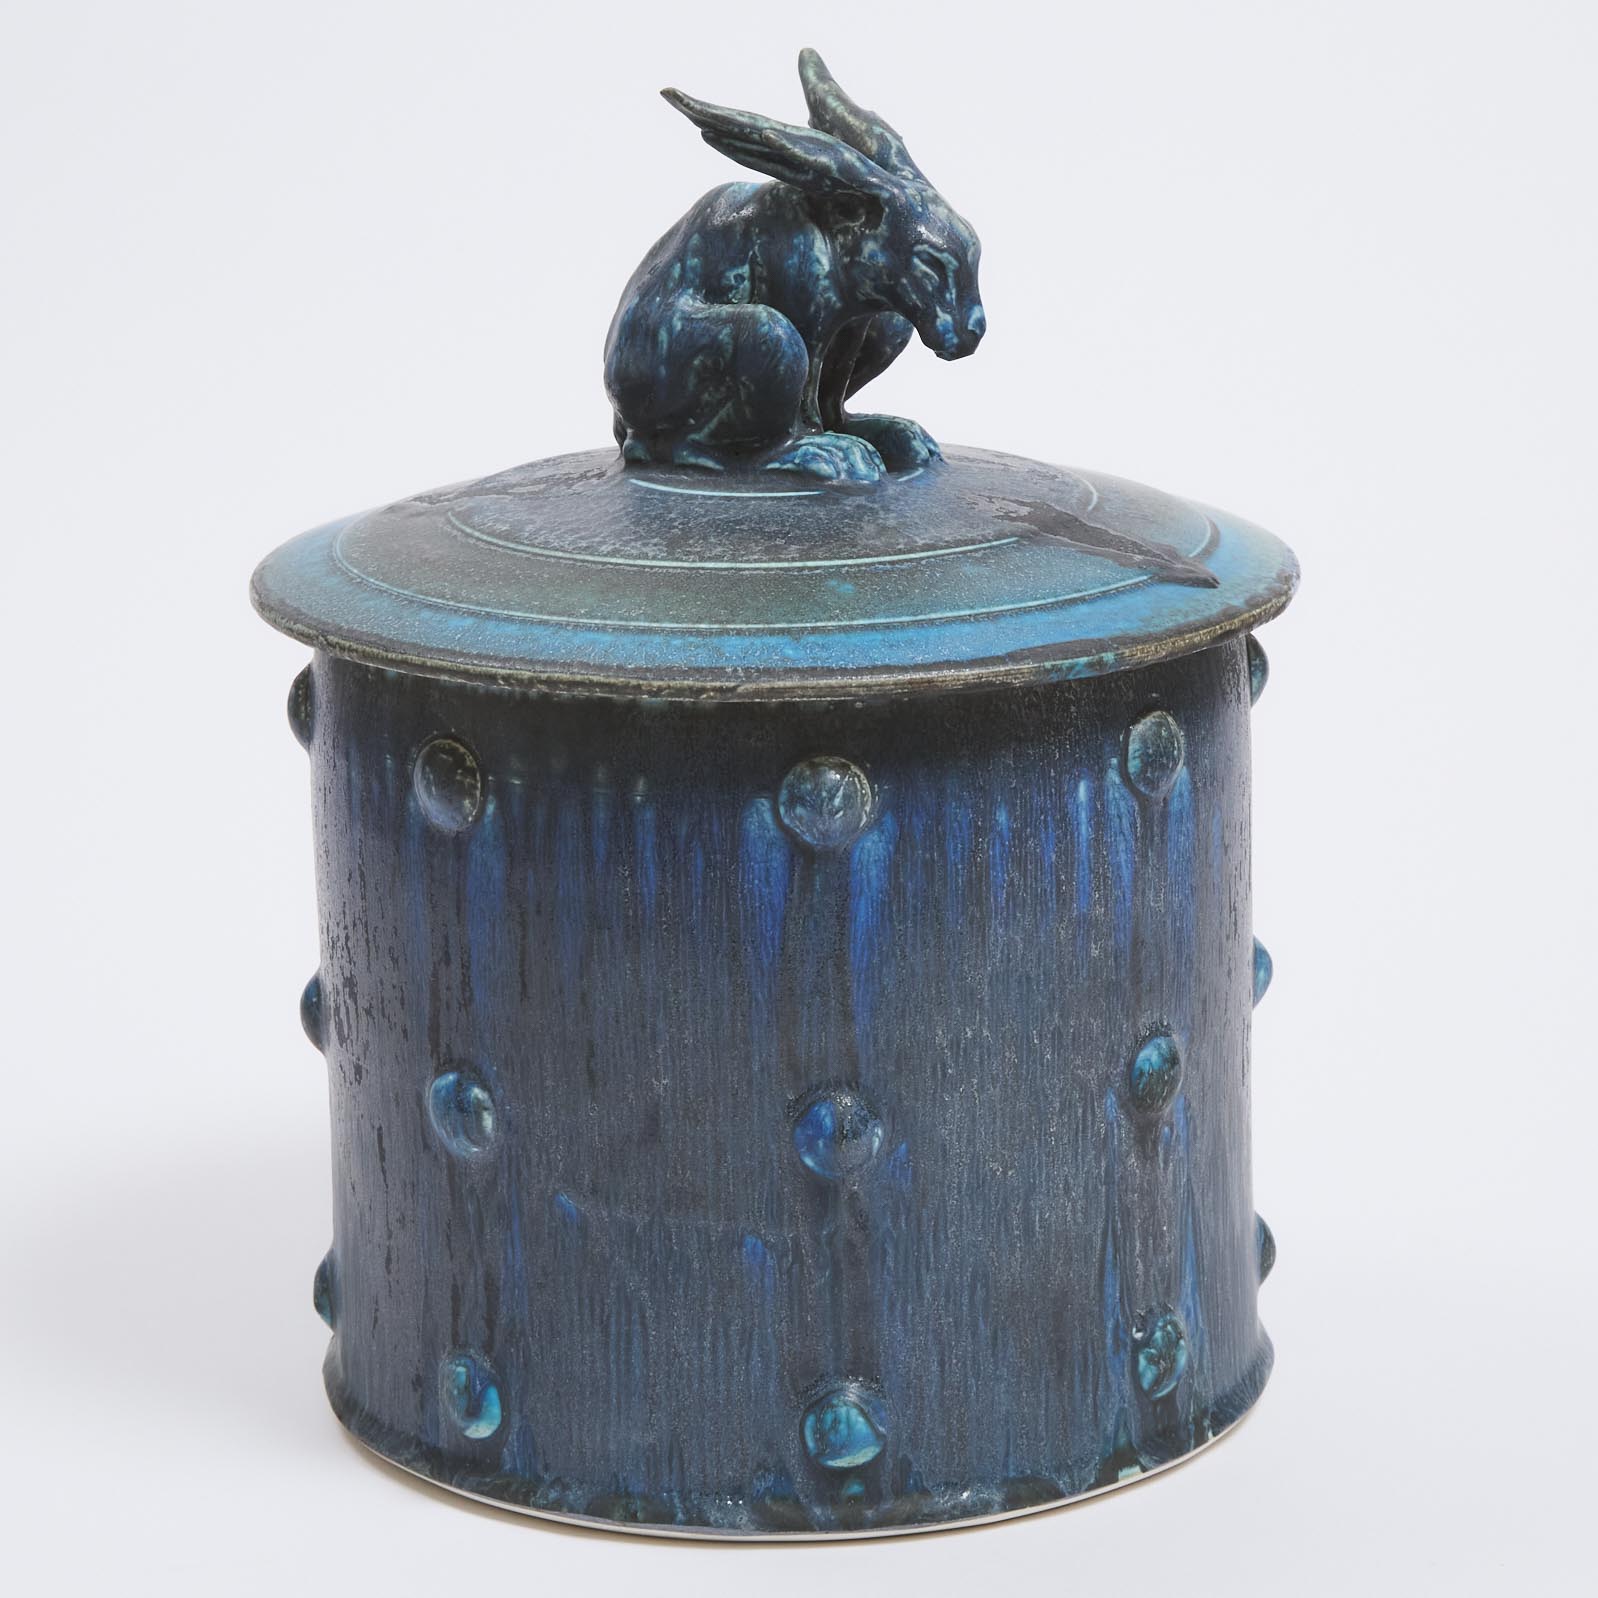 Christian Kuharik (American, b.1975), Large Covered Rabbit Jar, early 21st century